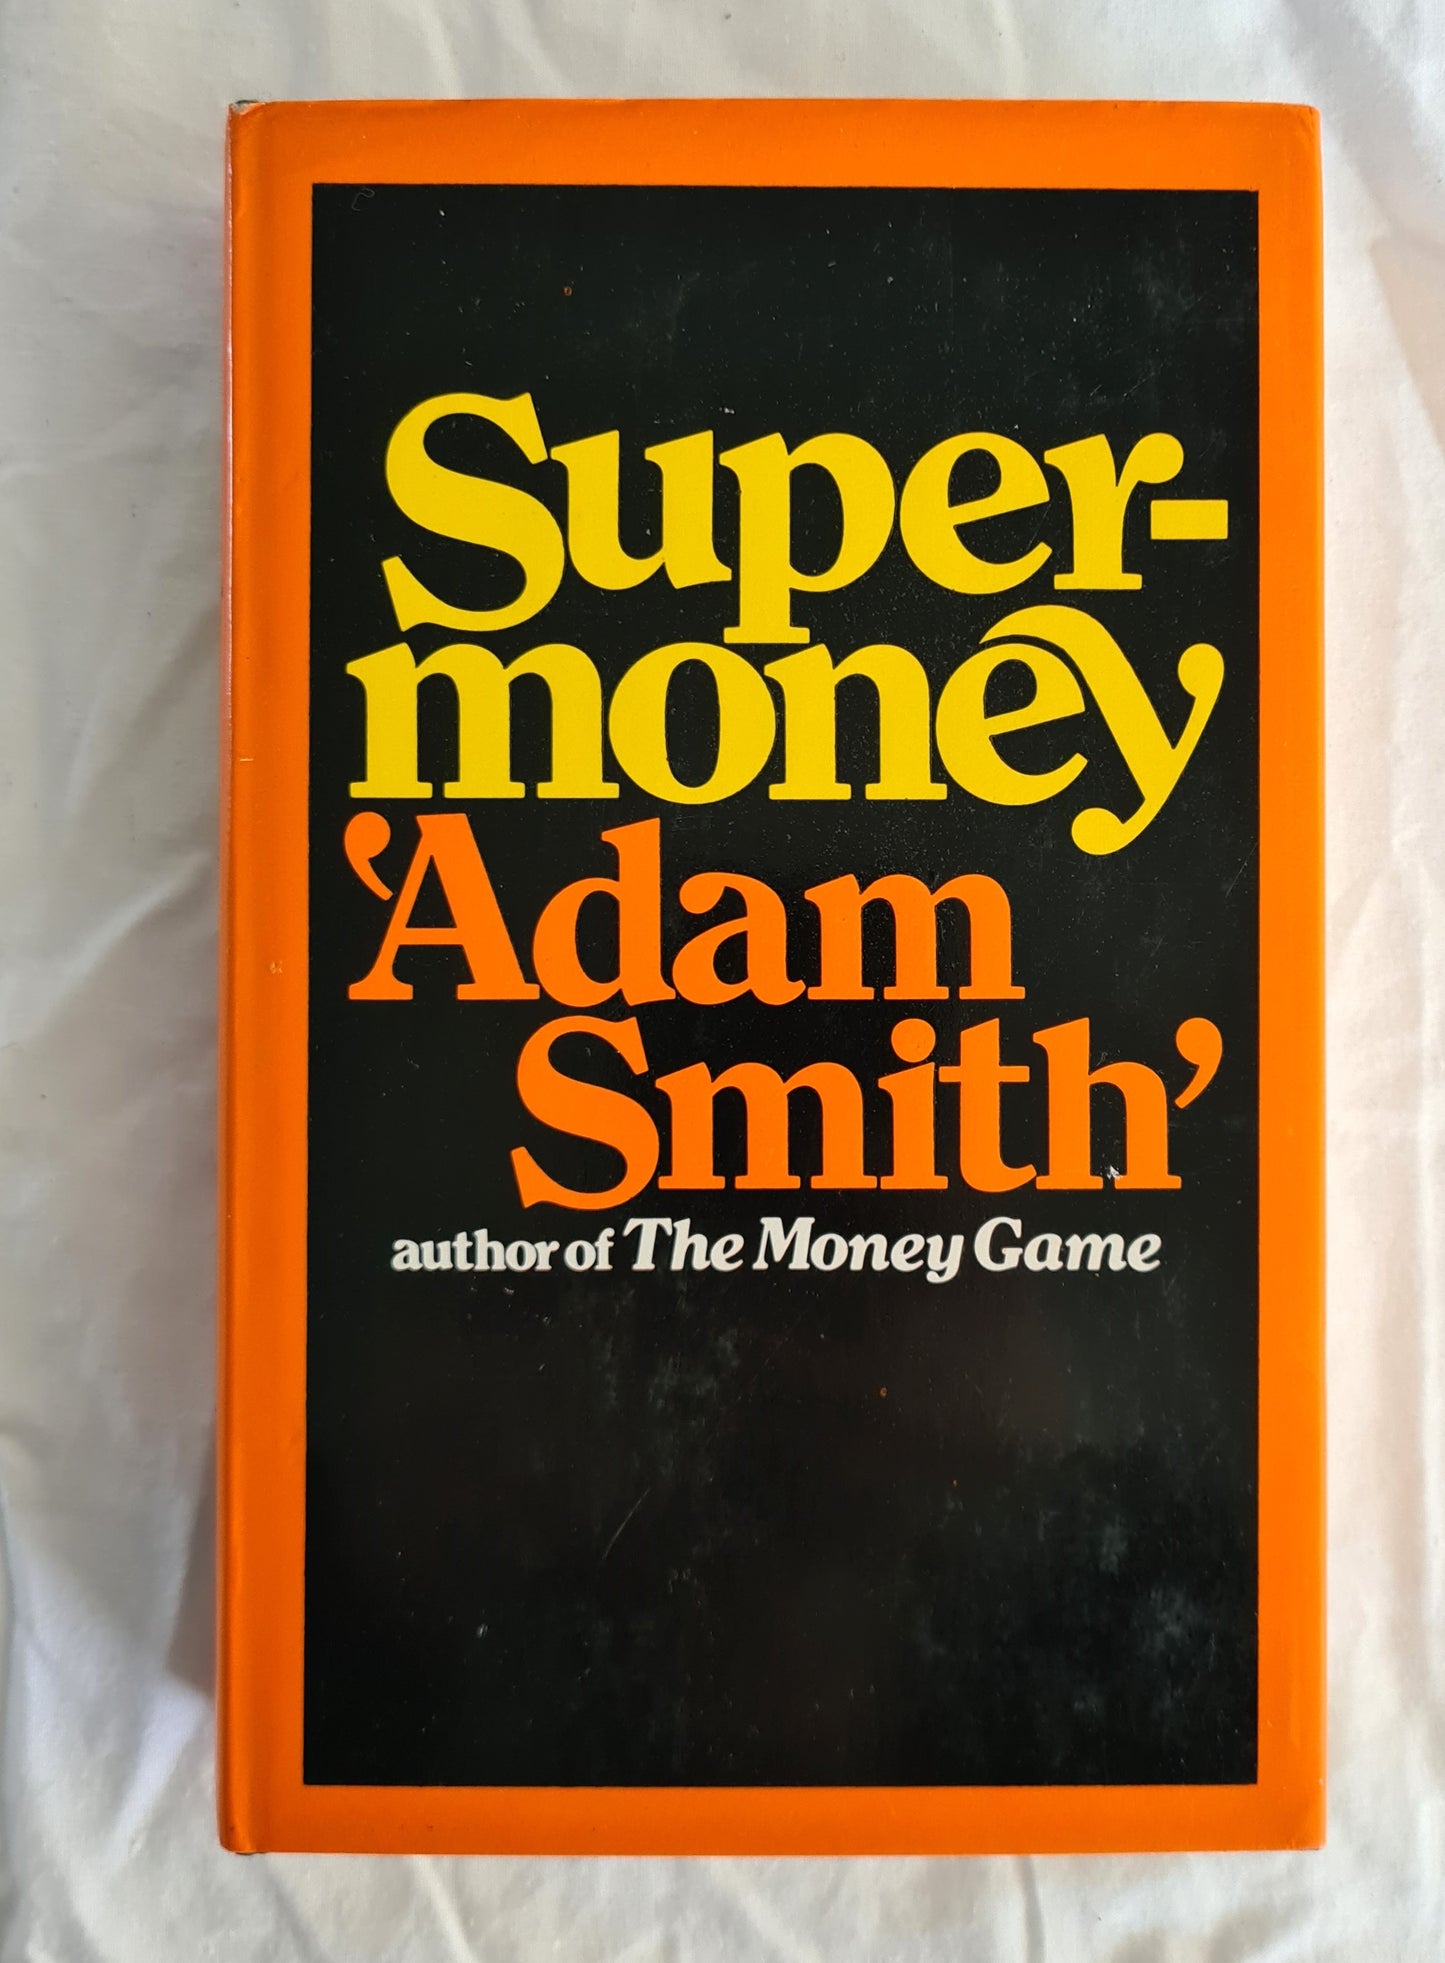 Supermoney  by Adam Smith